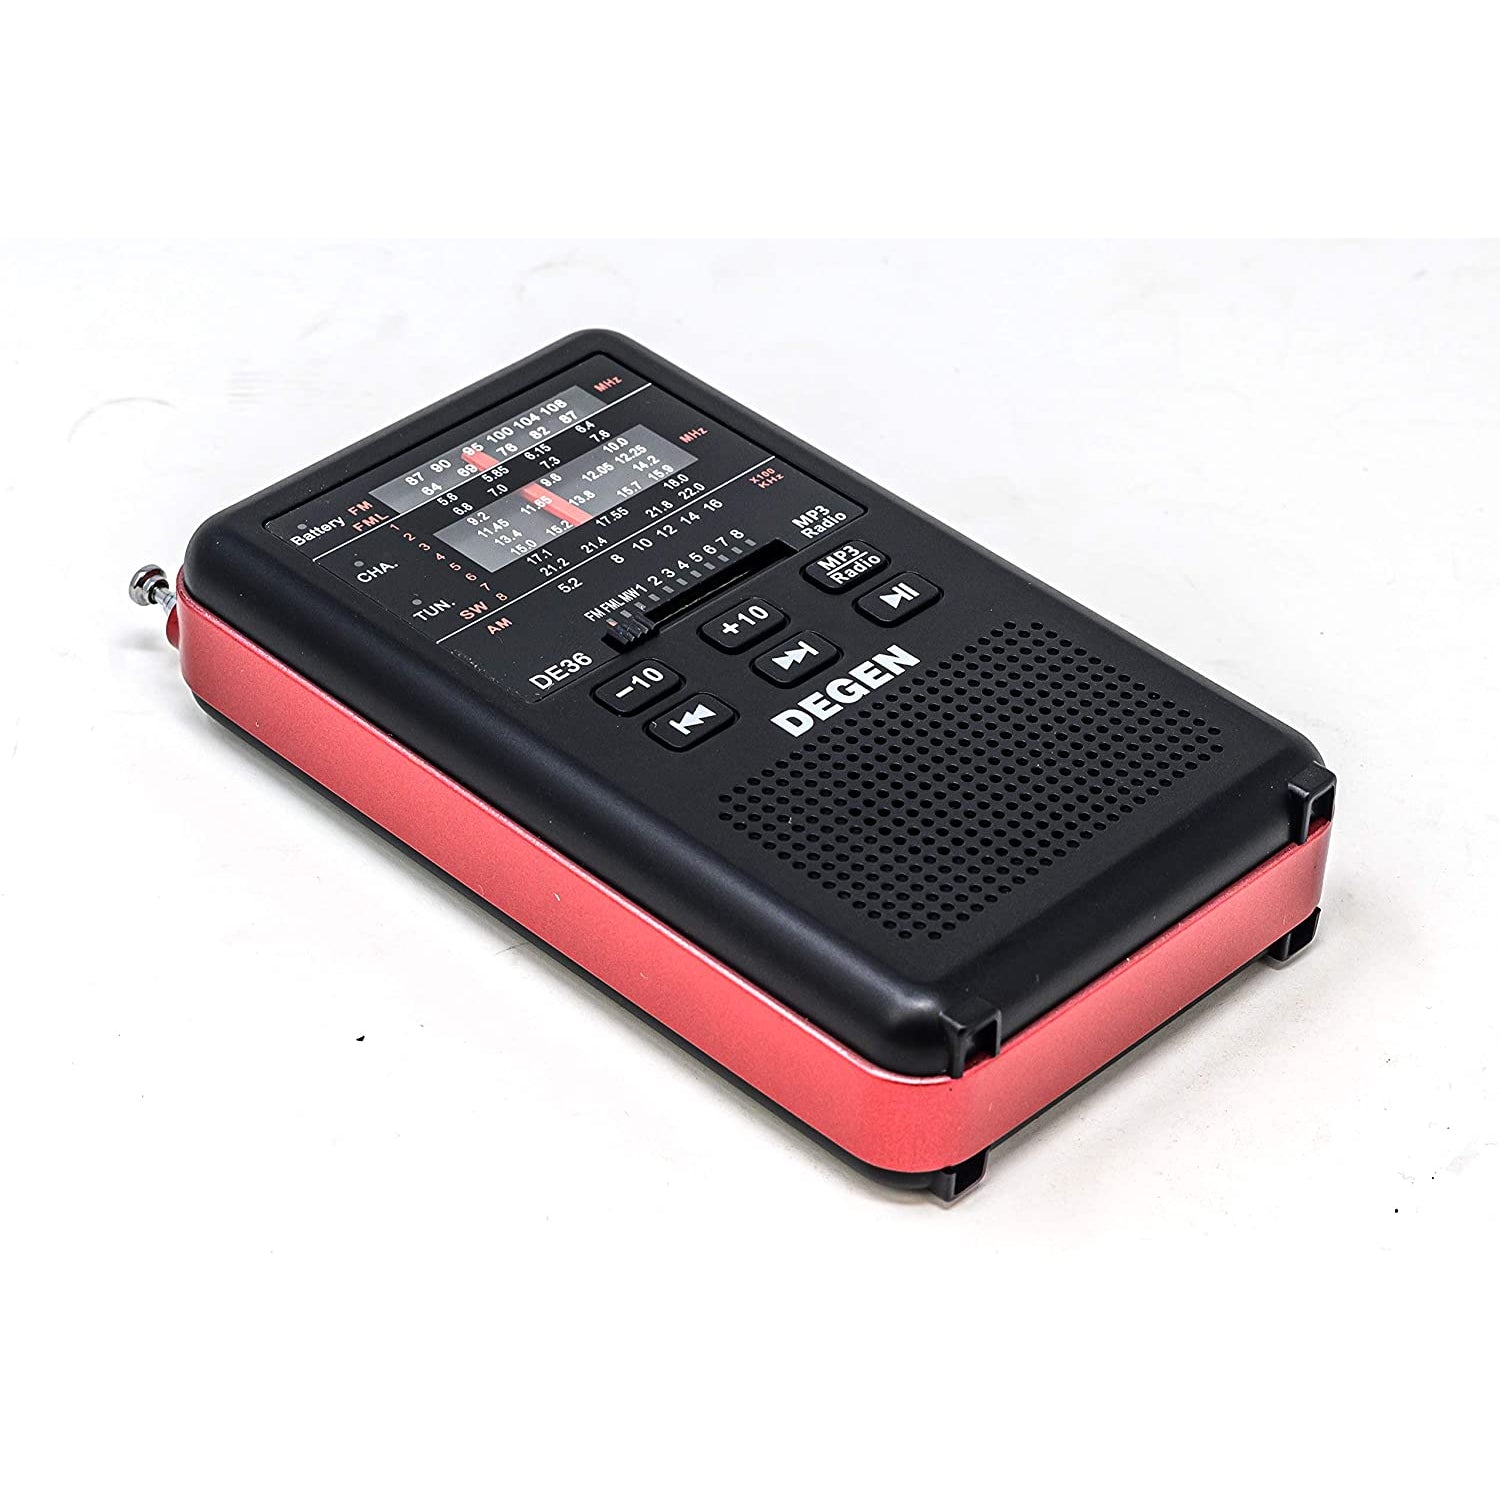 New Degen De1126 Shortwave Dsp Am Mini Fm Radio Ducha With 4gb Mp3 Player +  Voice Recorder + Screen + Rechargeable Battery Pack - Radio - AliExpress